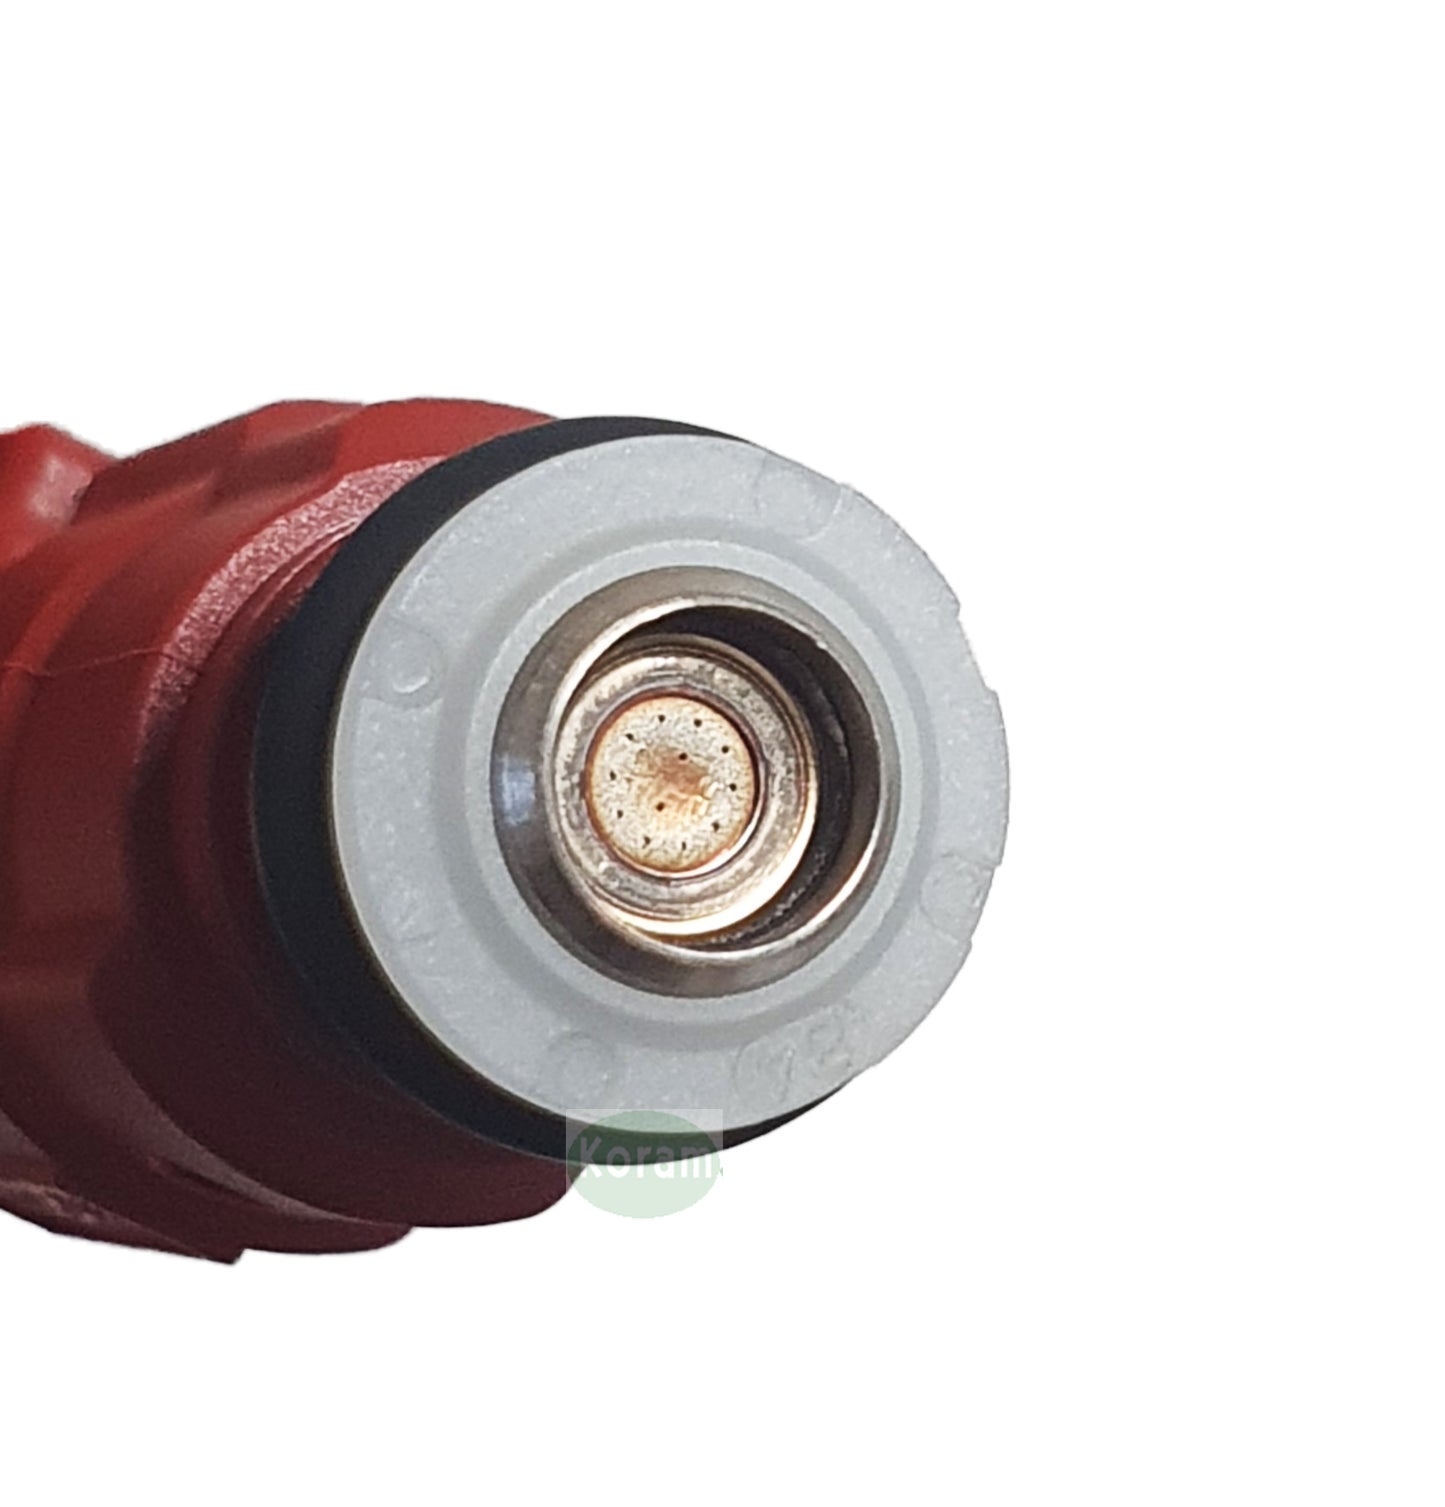 35310-2E000 -GENUINE Fuel Injector for 11-19 Elantra Veloster Forte Soul 1.8L 2.0L ,1pcs